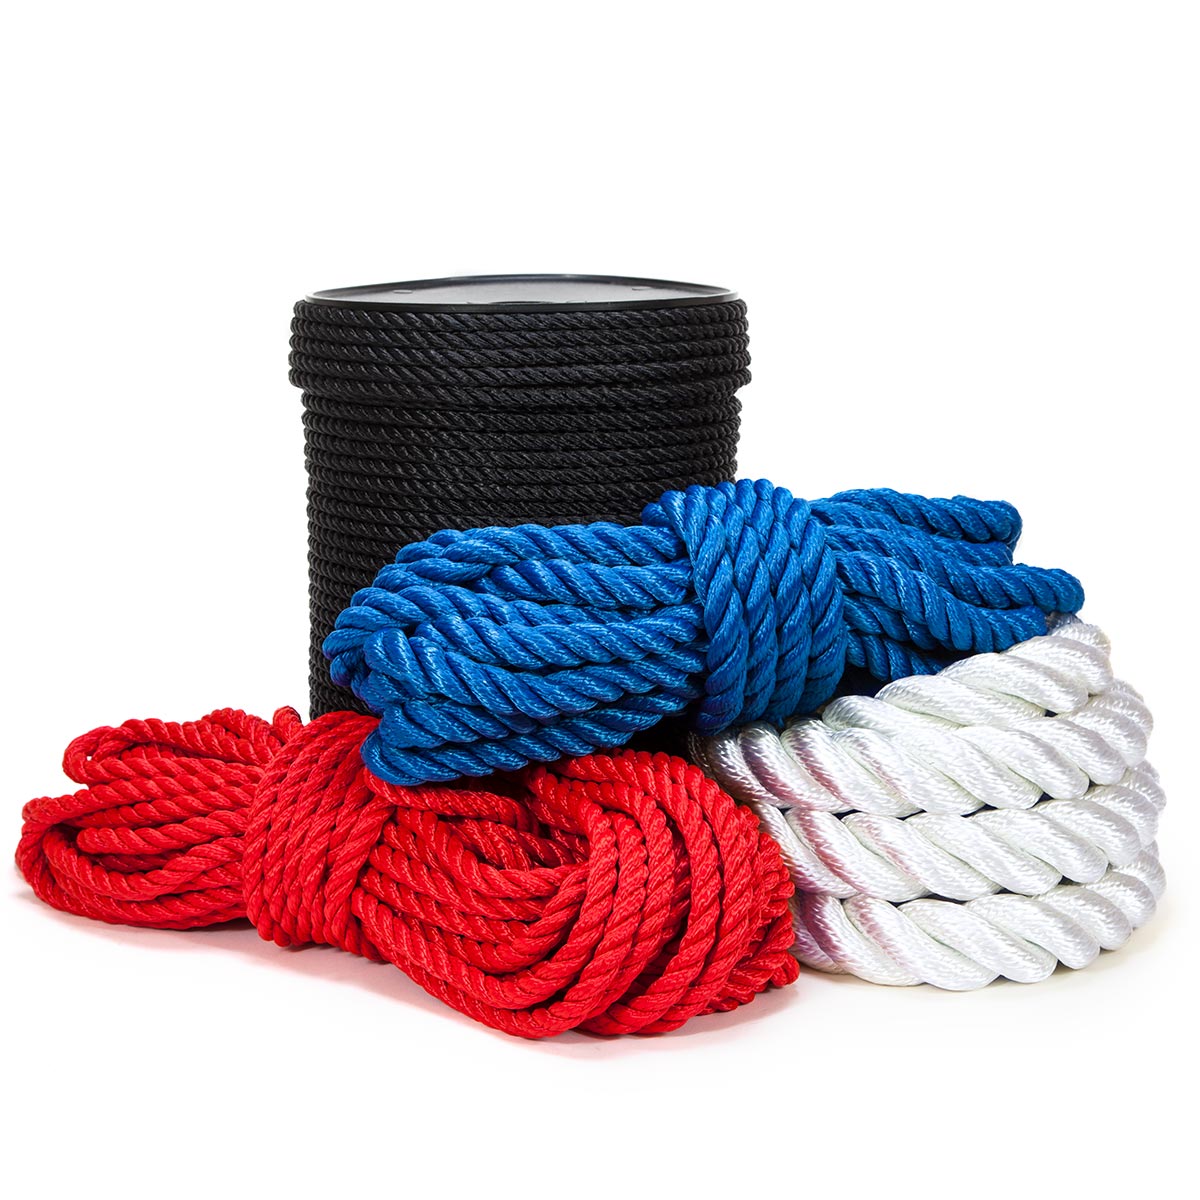 Nylon Ropes in Ropes 